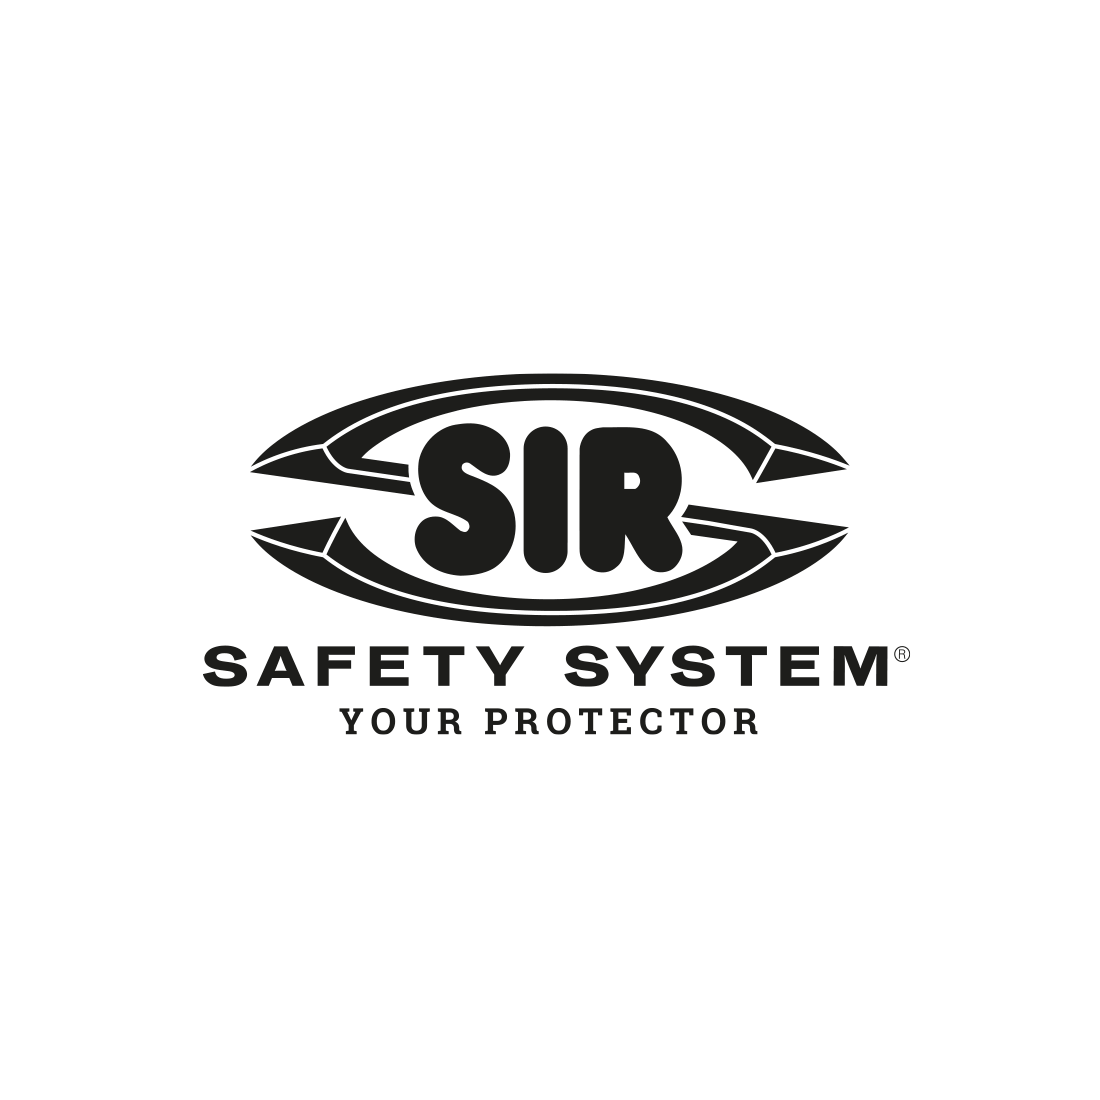 SIR Safety System